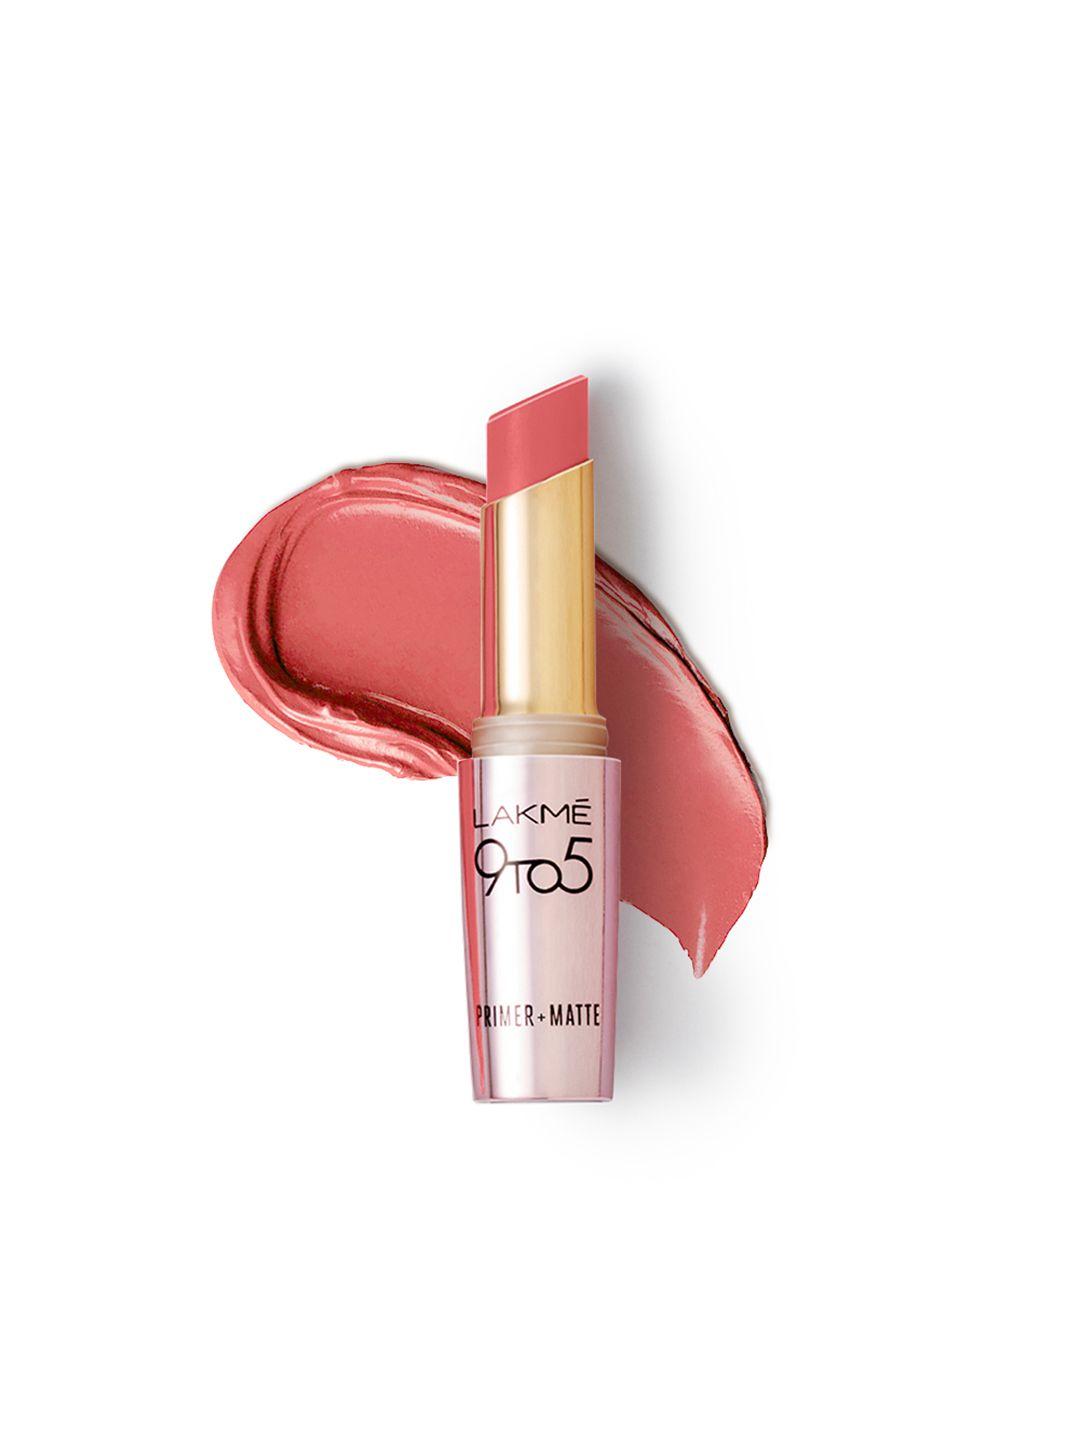 lakme 9 to 5 primer + matte long lasting lipstick 3.6 g - blush nude